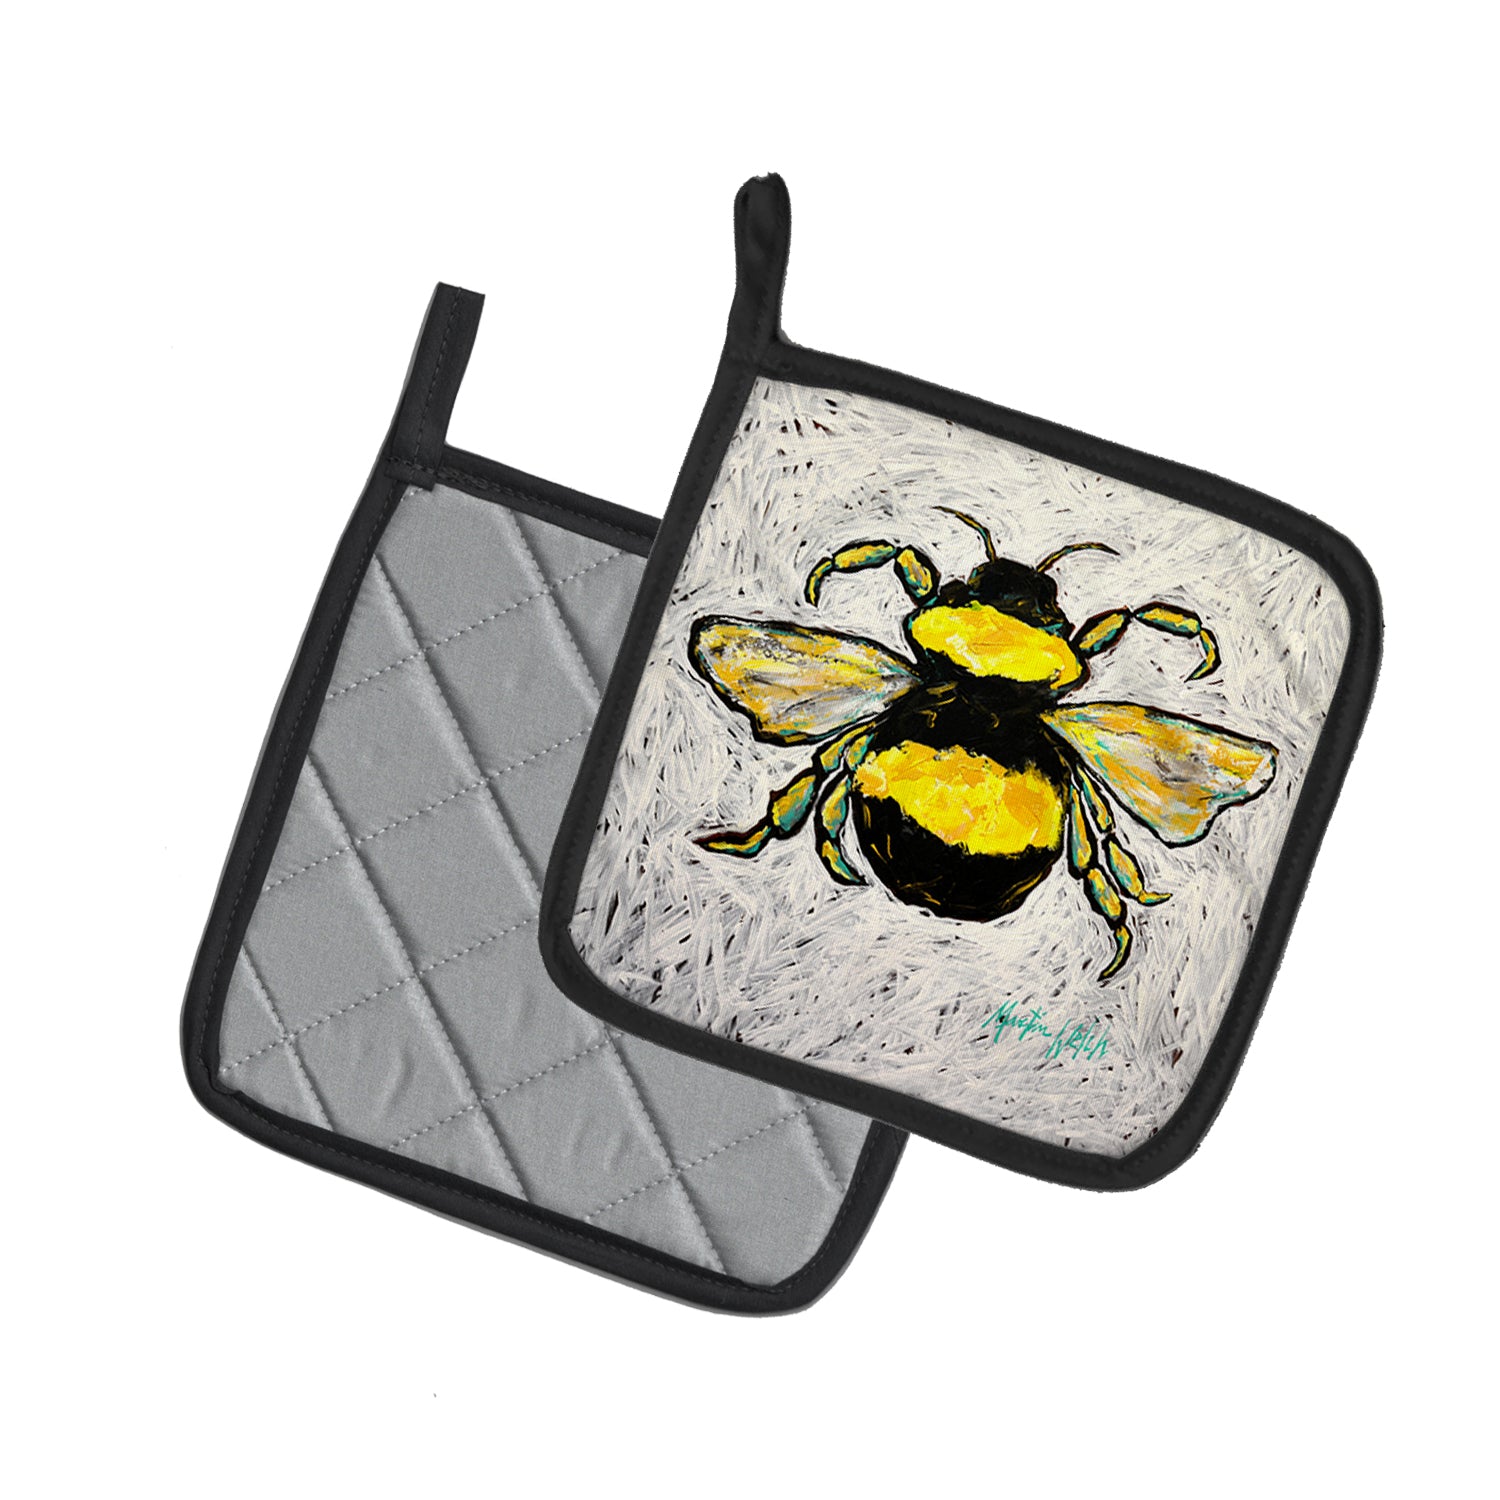 Buy this Buzzbee Bumblebee Pair of Pot Holders